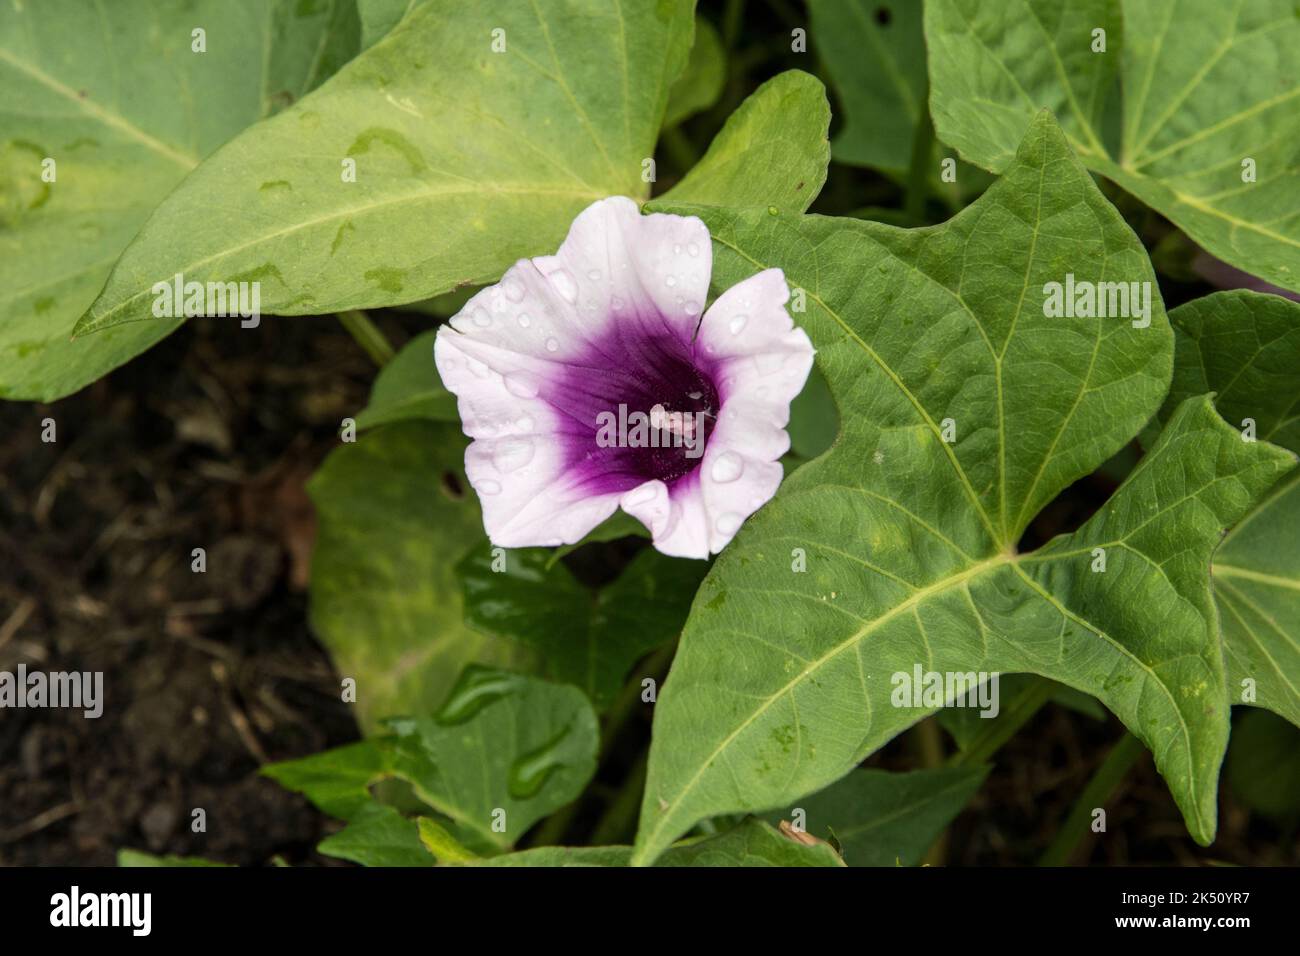 Flower of Ipomoea batatas Stock Photo